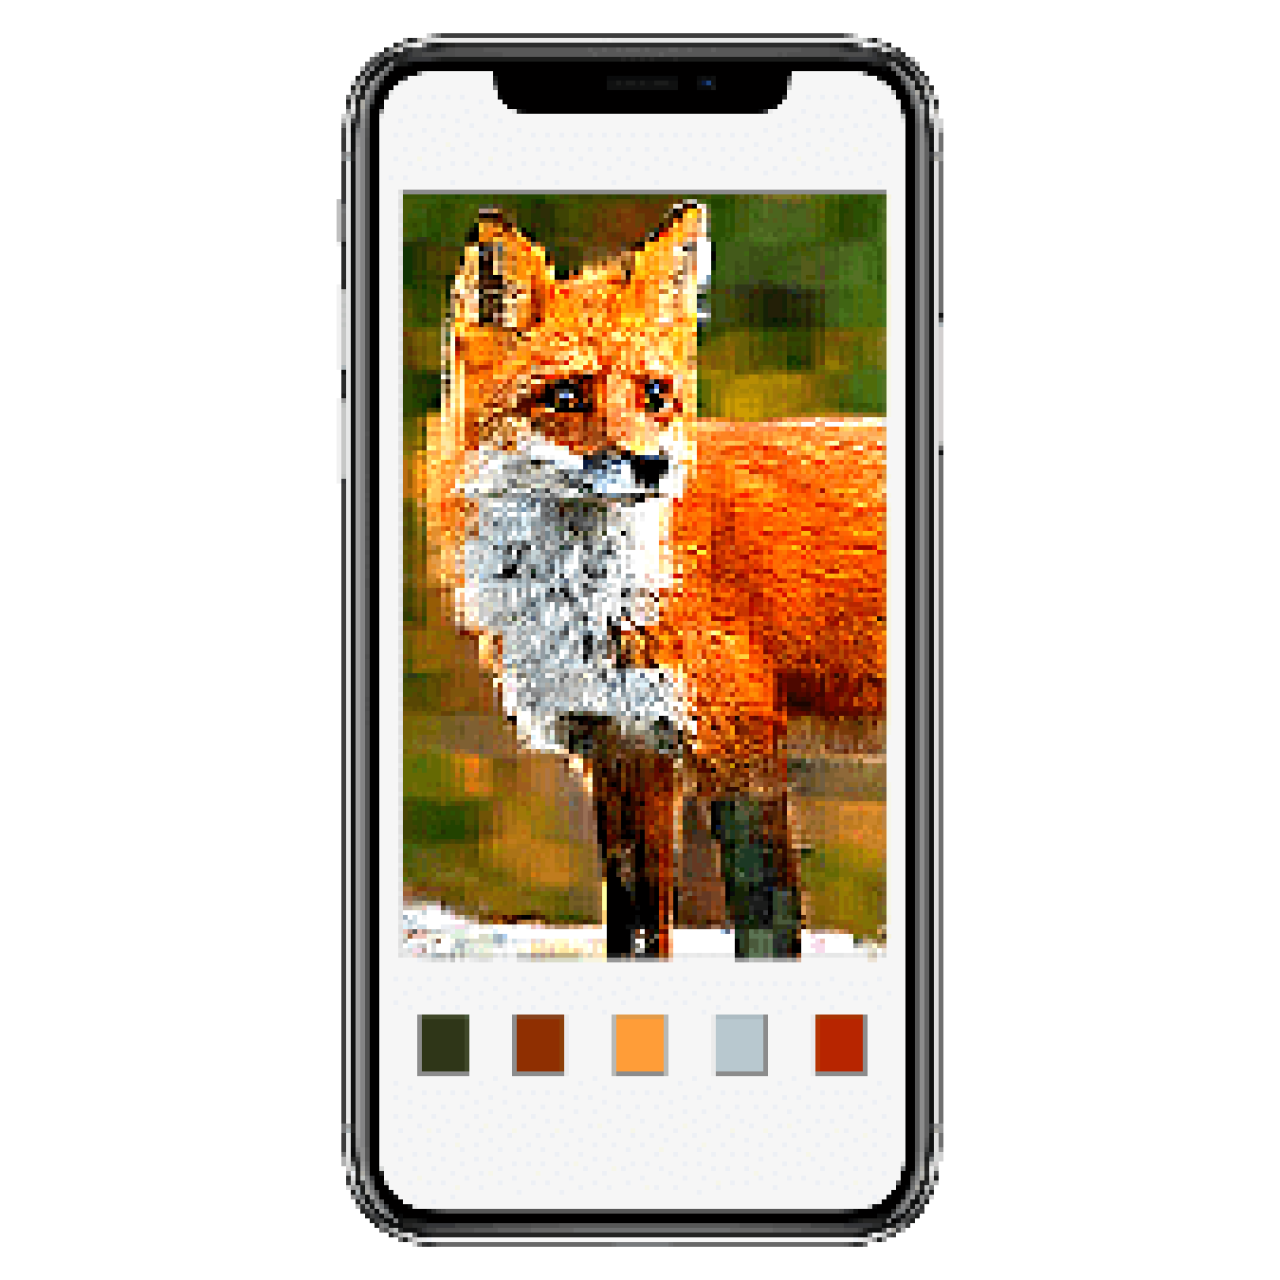 Coloring book app - fox